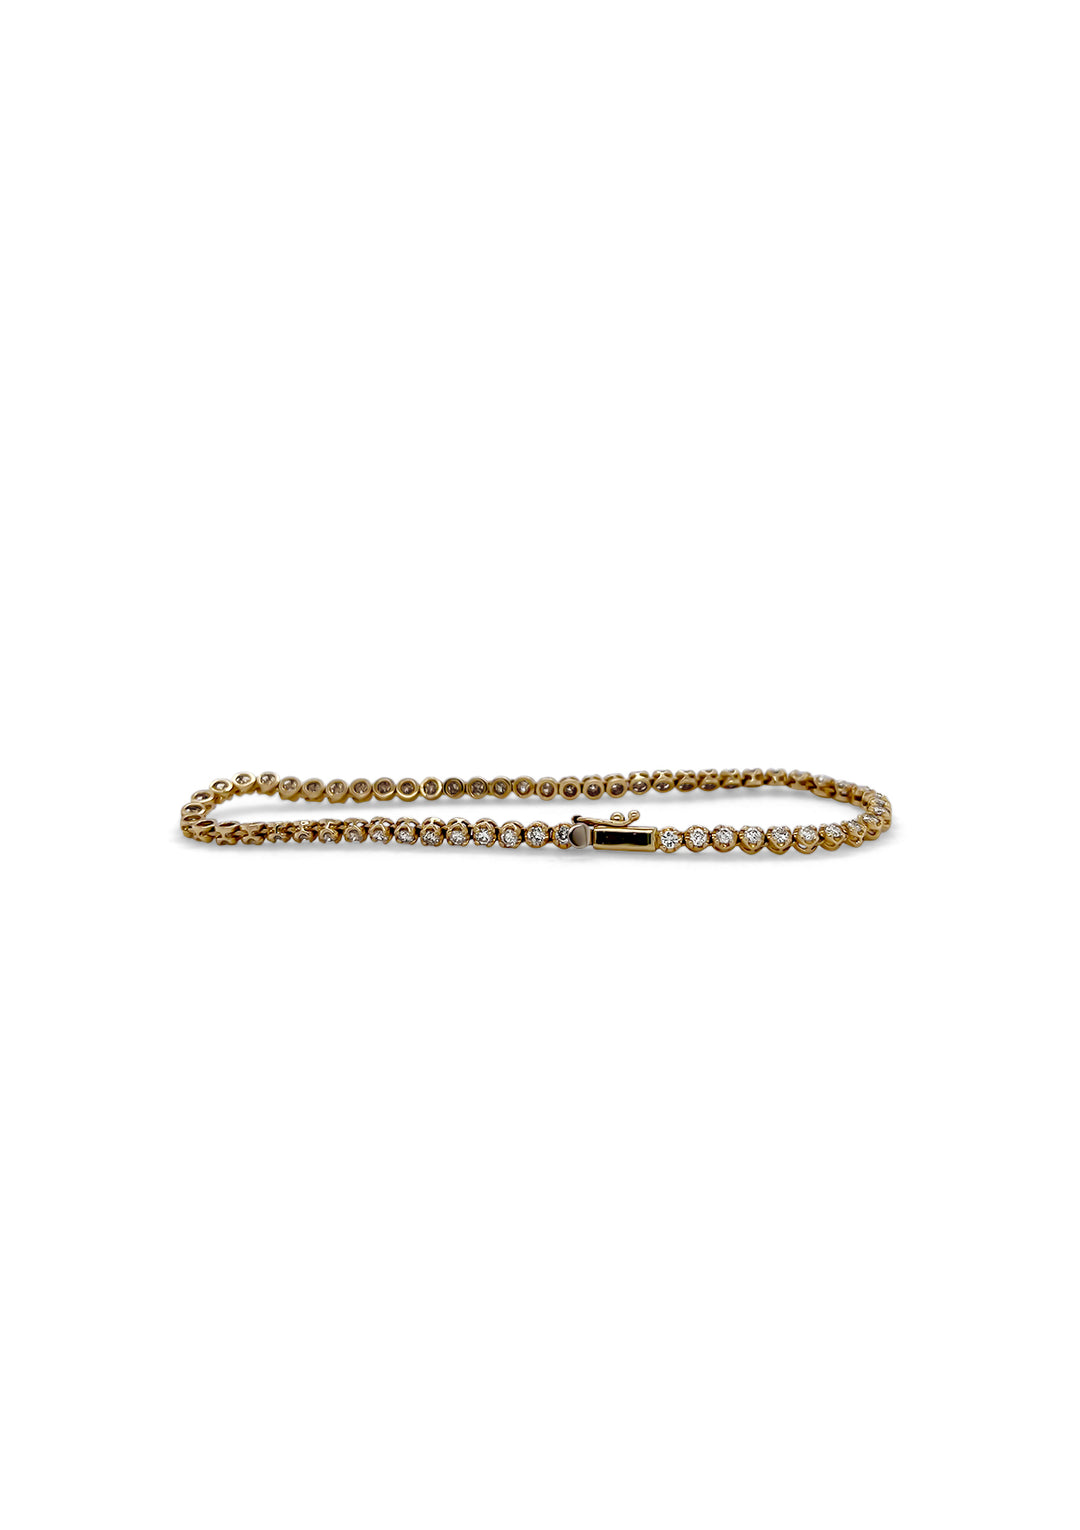 14K Yellow Gold 1.77 Carat Diamond Tennis Bracelet